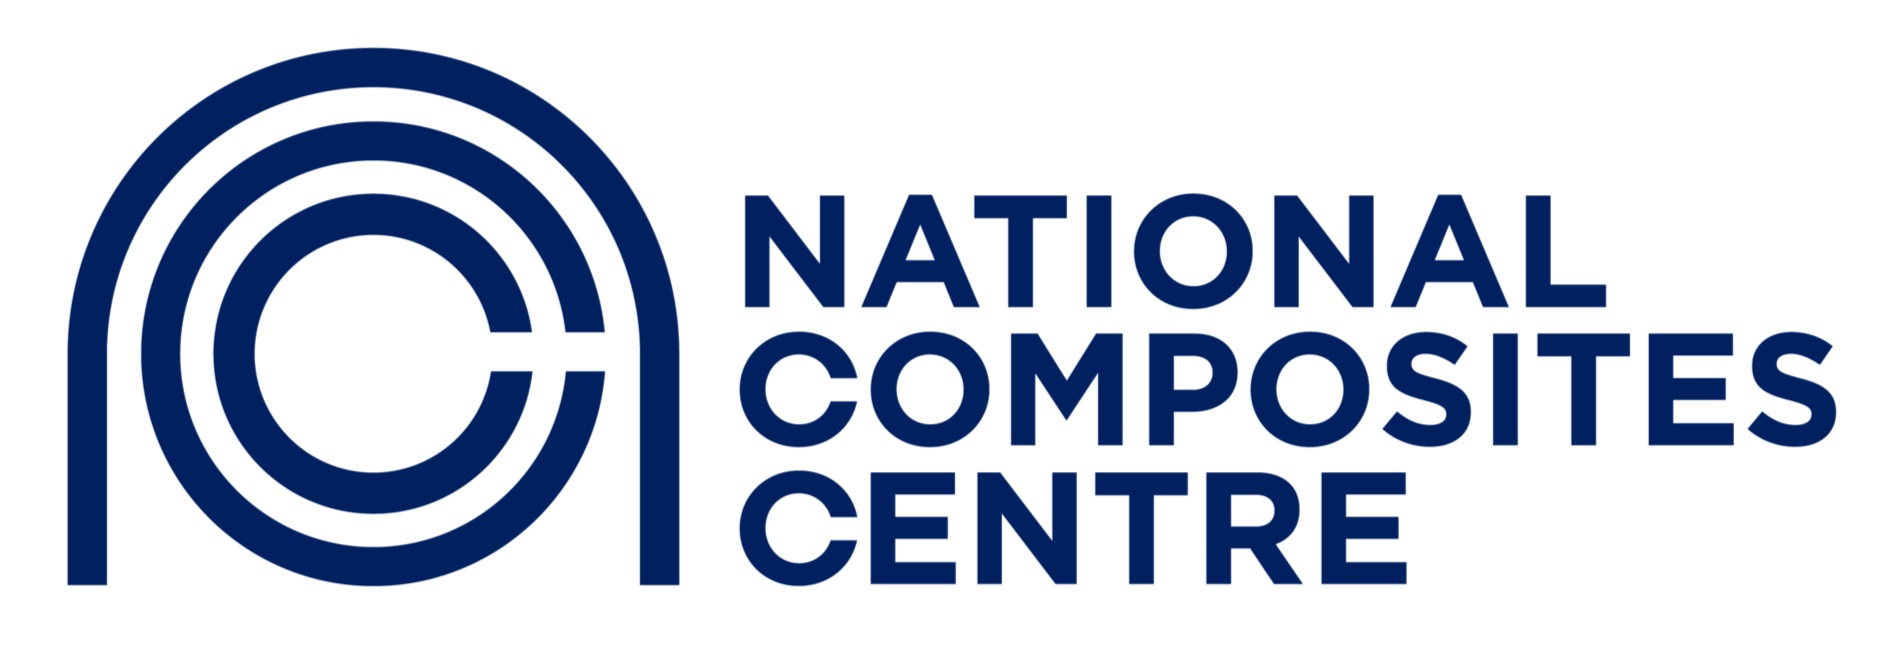 NCC-Main-logo-RGB_Full Colour.png